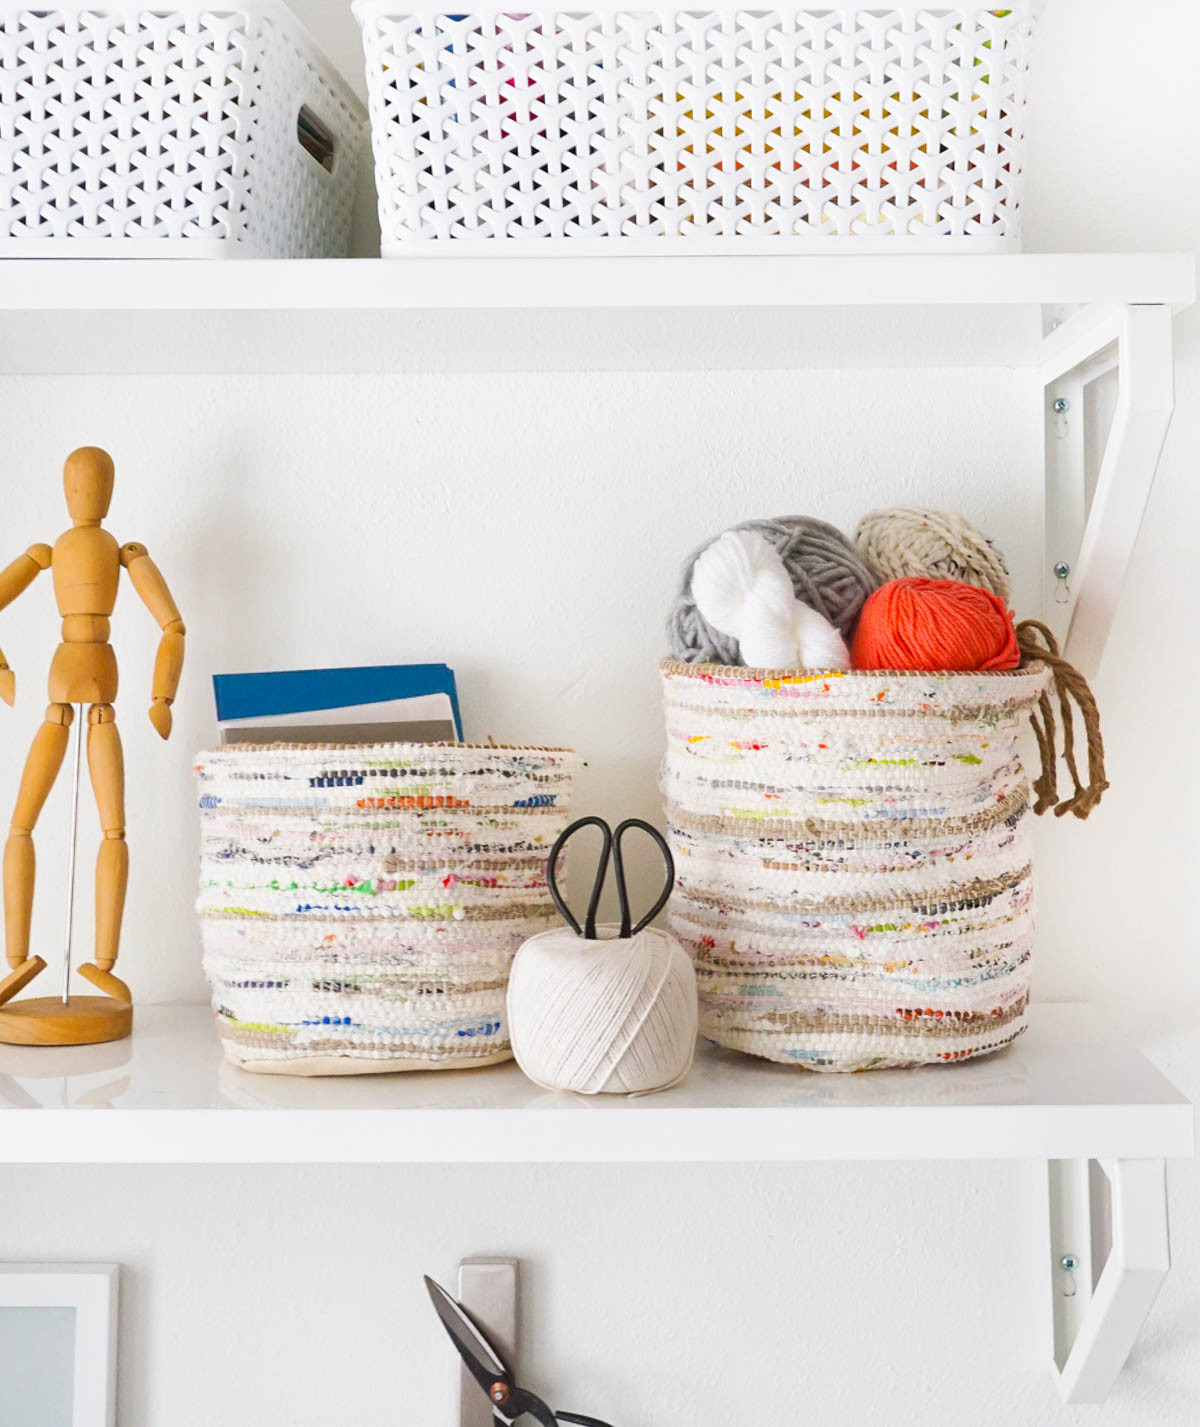 Best ideas about DIY Storage Basket
. Save or Pin DIY Rag Rug Storage Baskets Now.